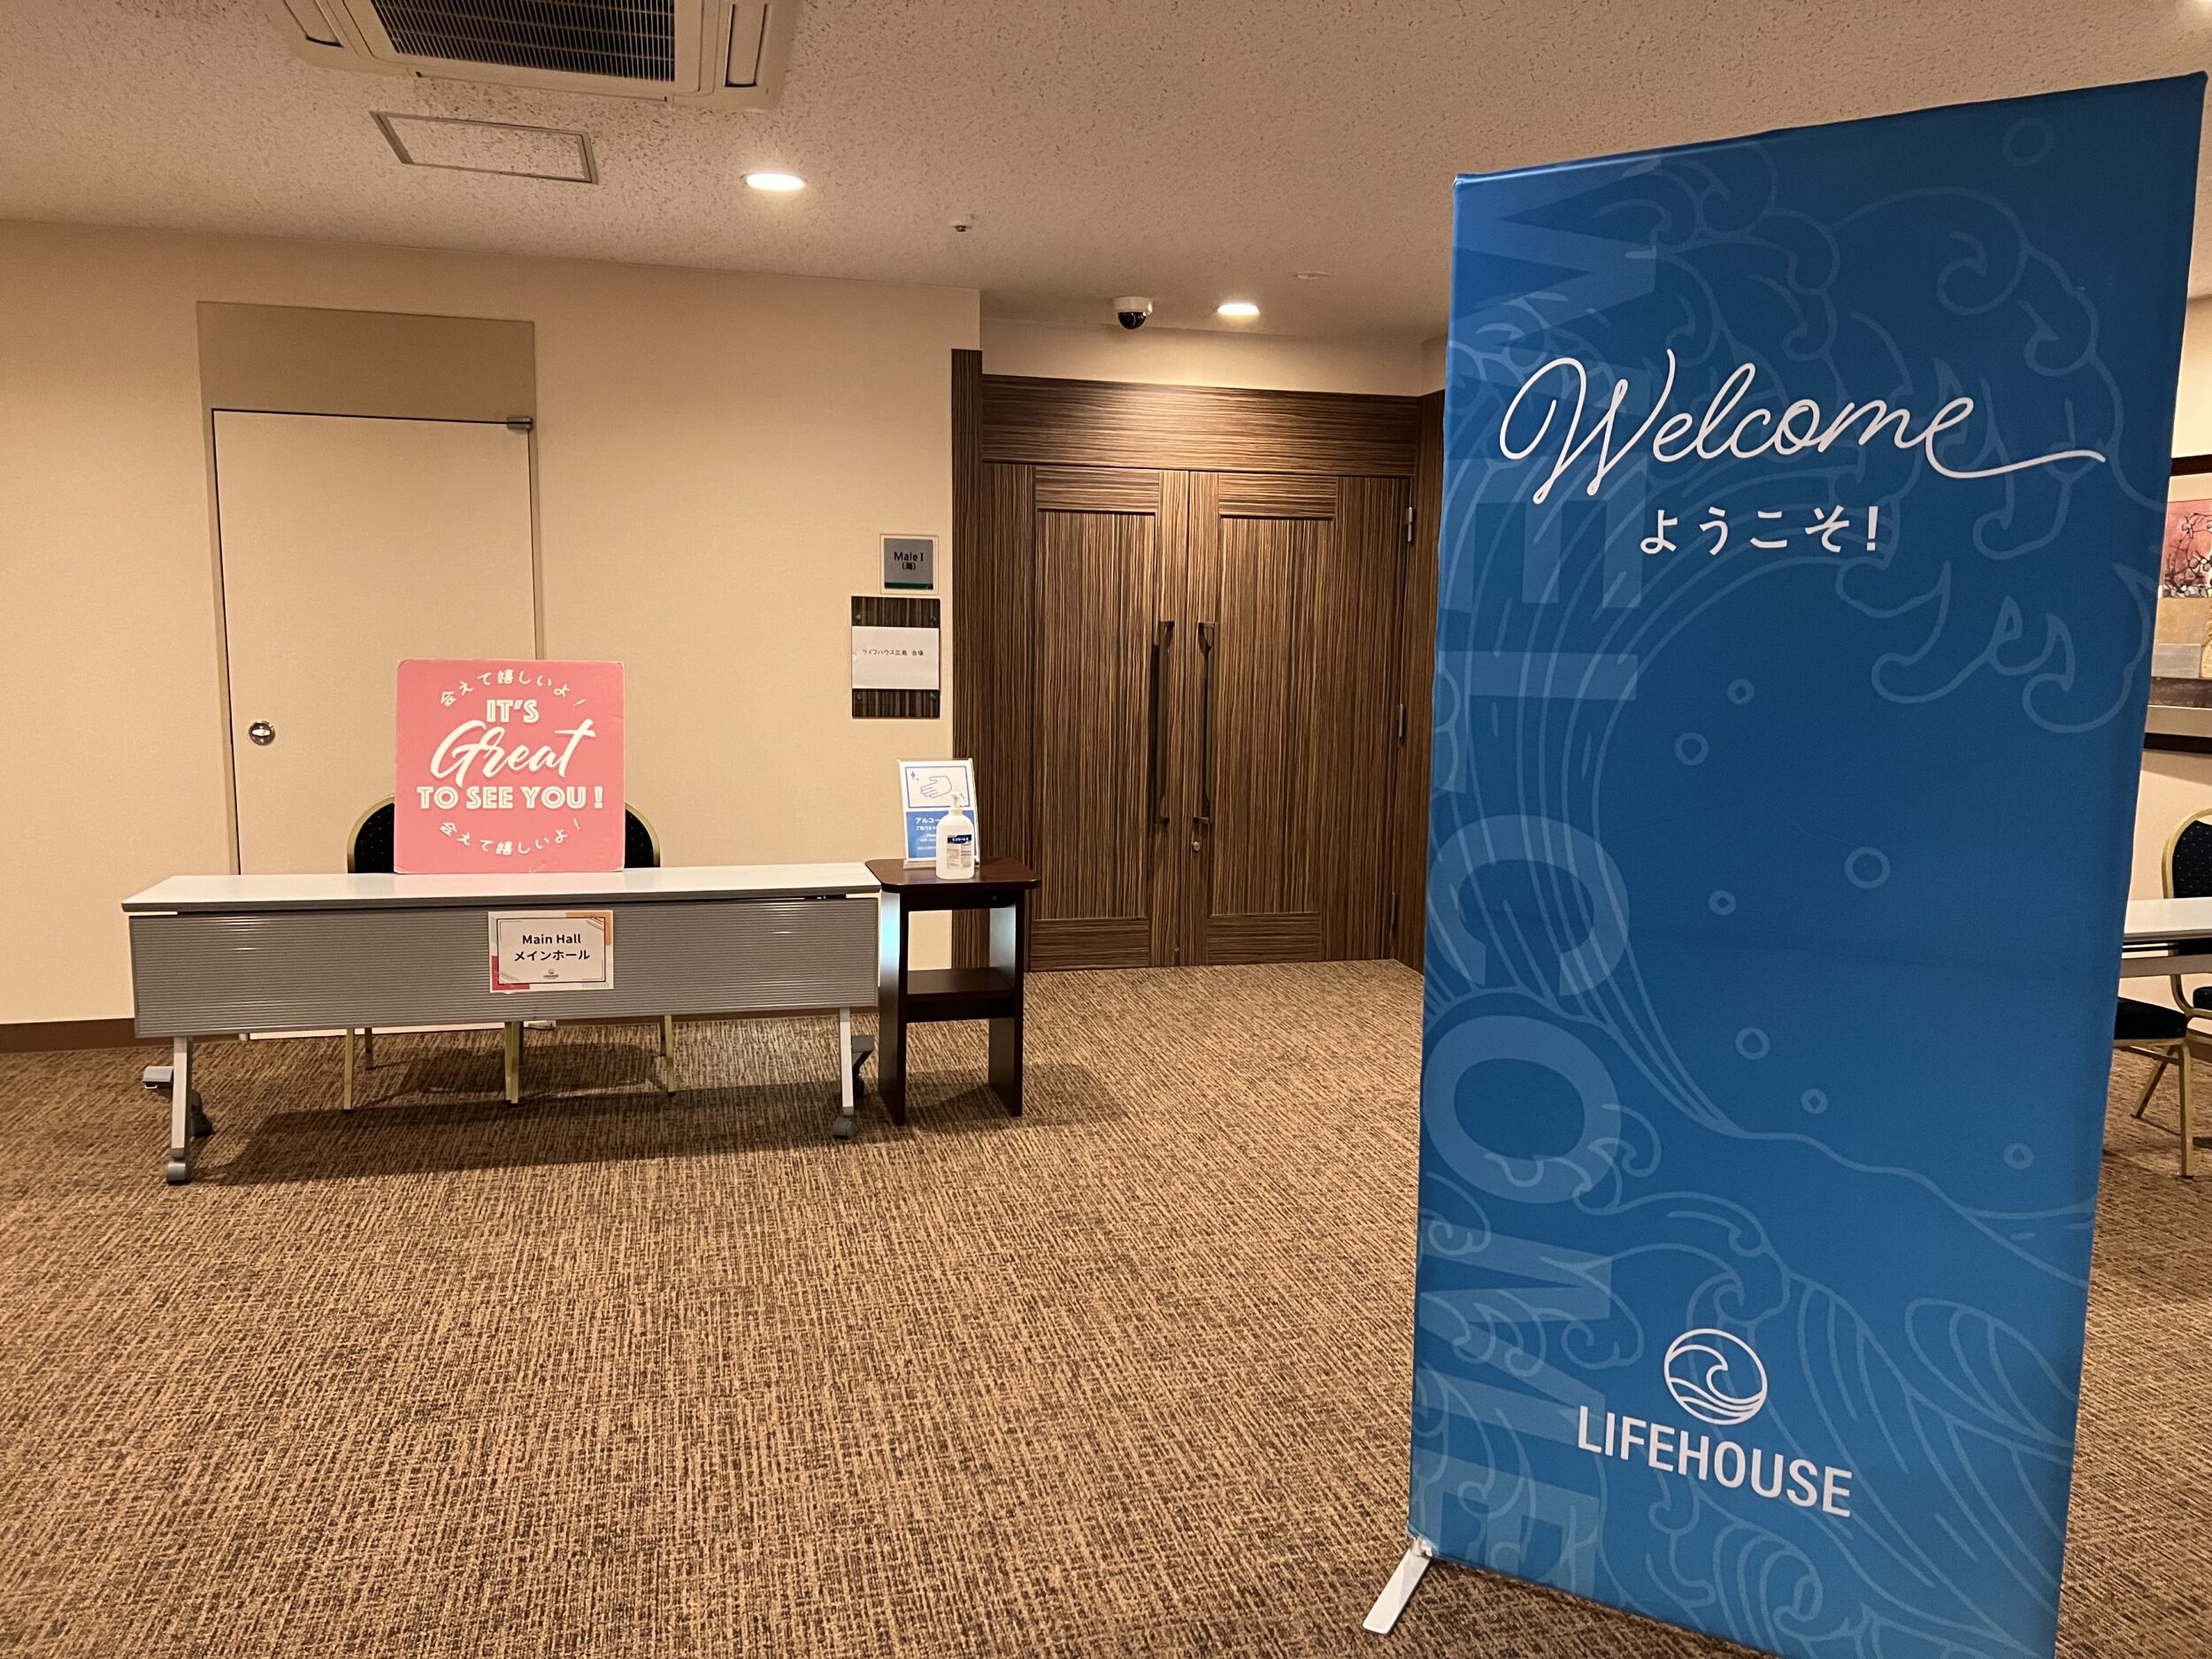 Lifehouse Hiroshima venue,  service times & location